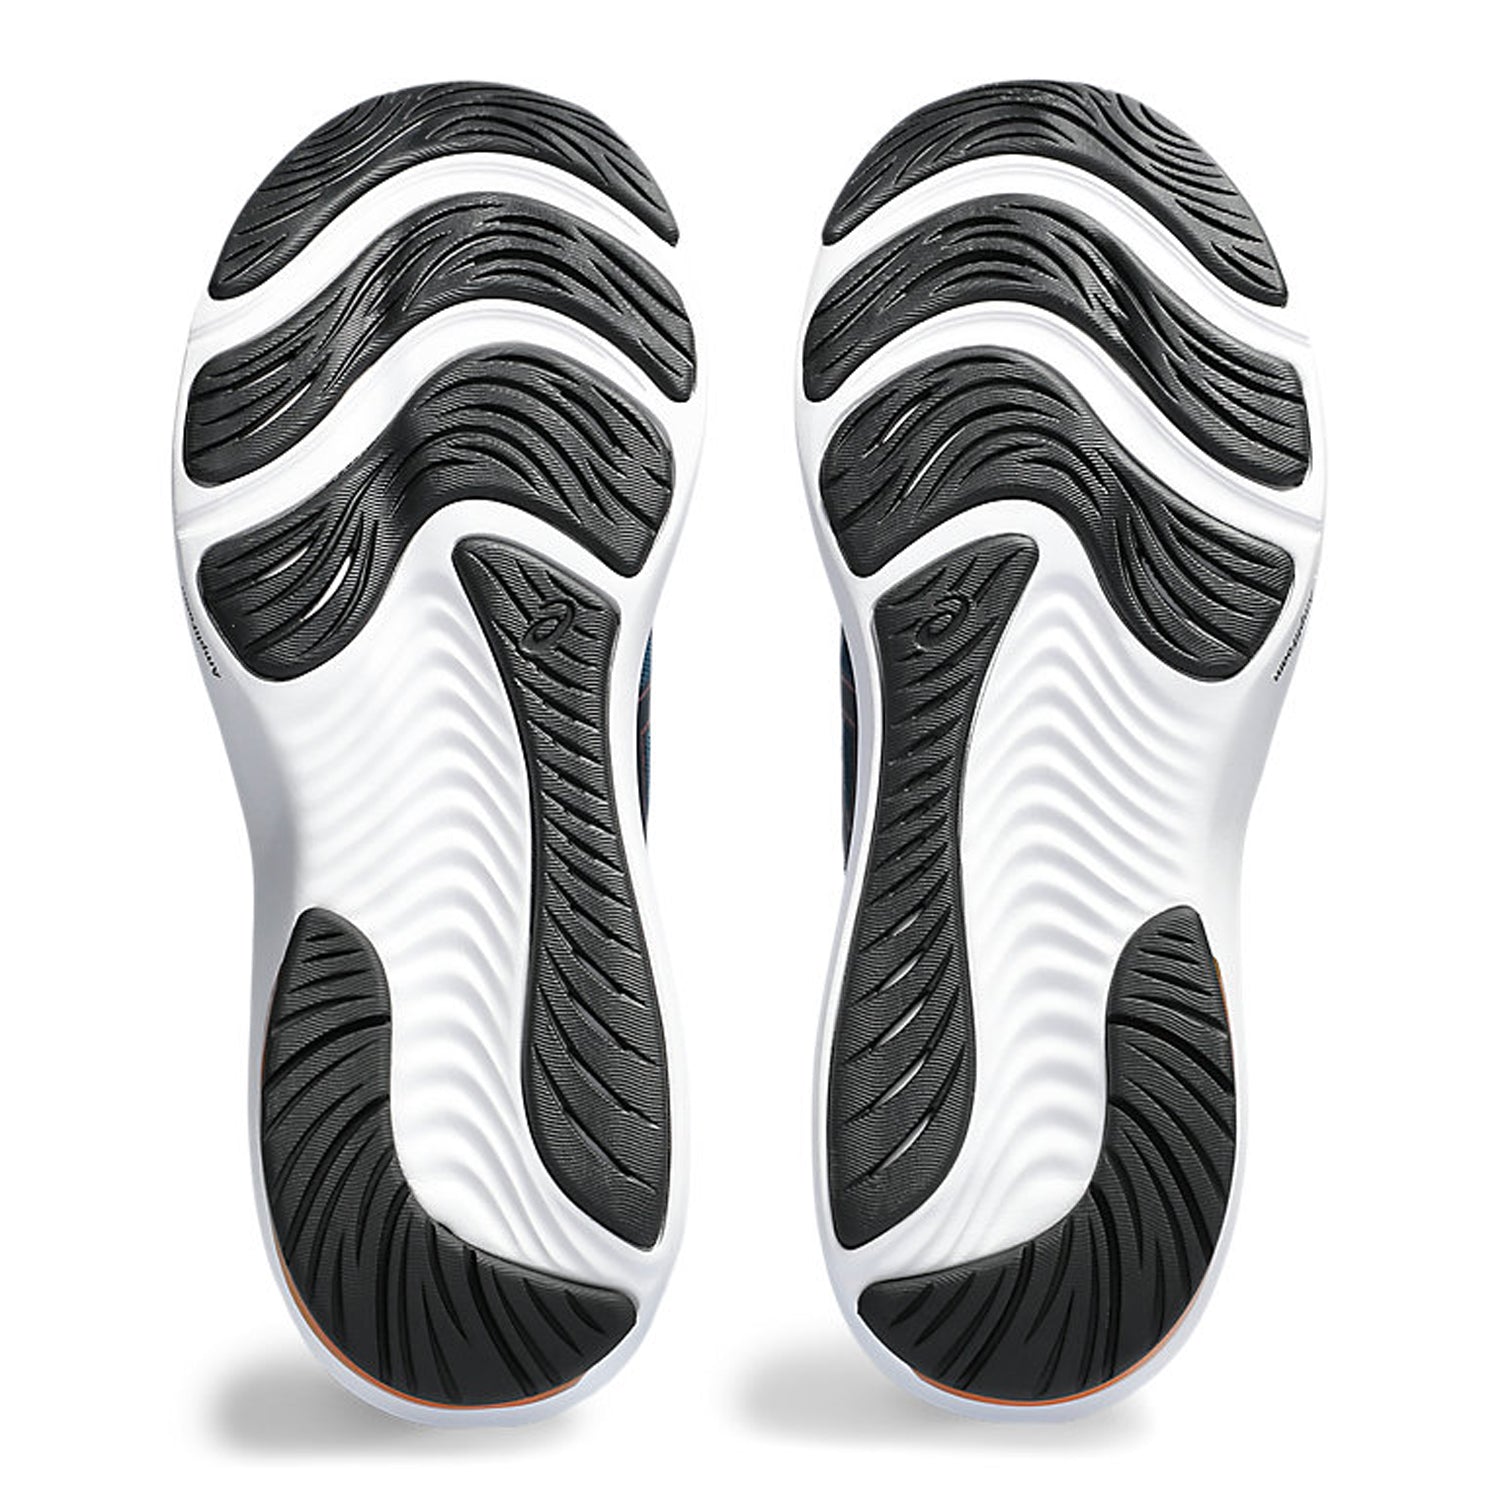 Asics Gel-Pulse 14 Men's Running Shoes - Best Price online Prokicksports.com